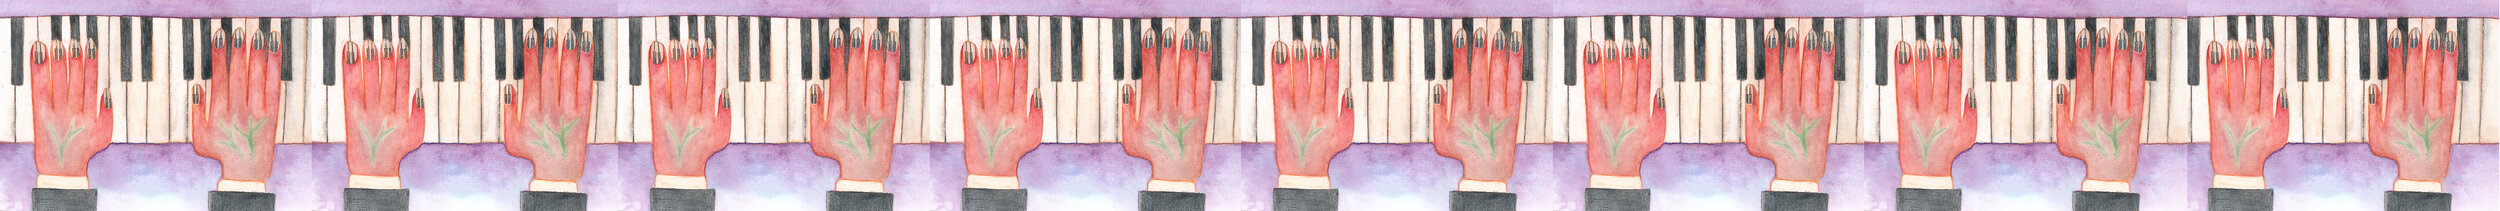 Small_Pattern_Pianist_Hands.jpg